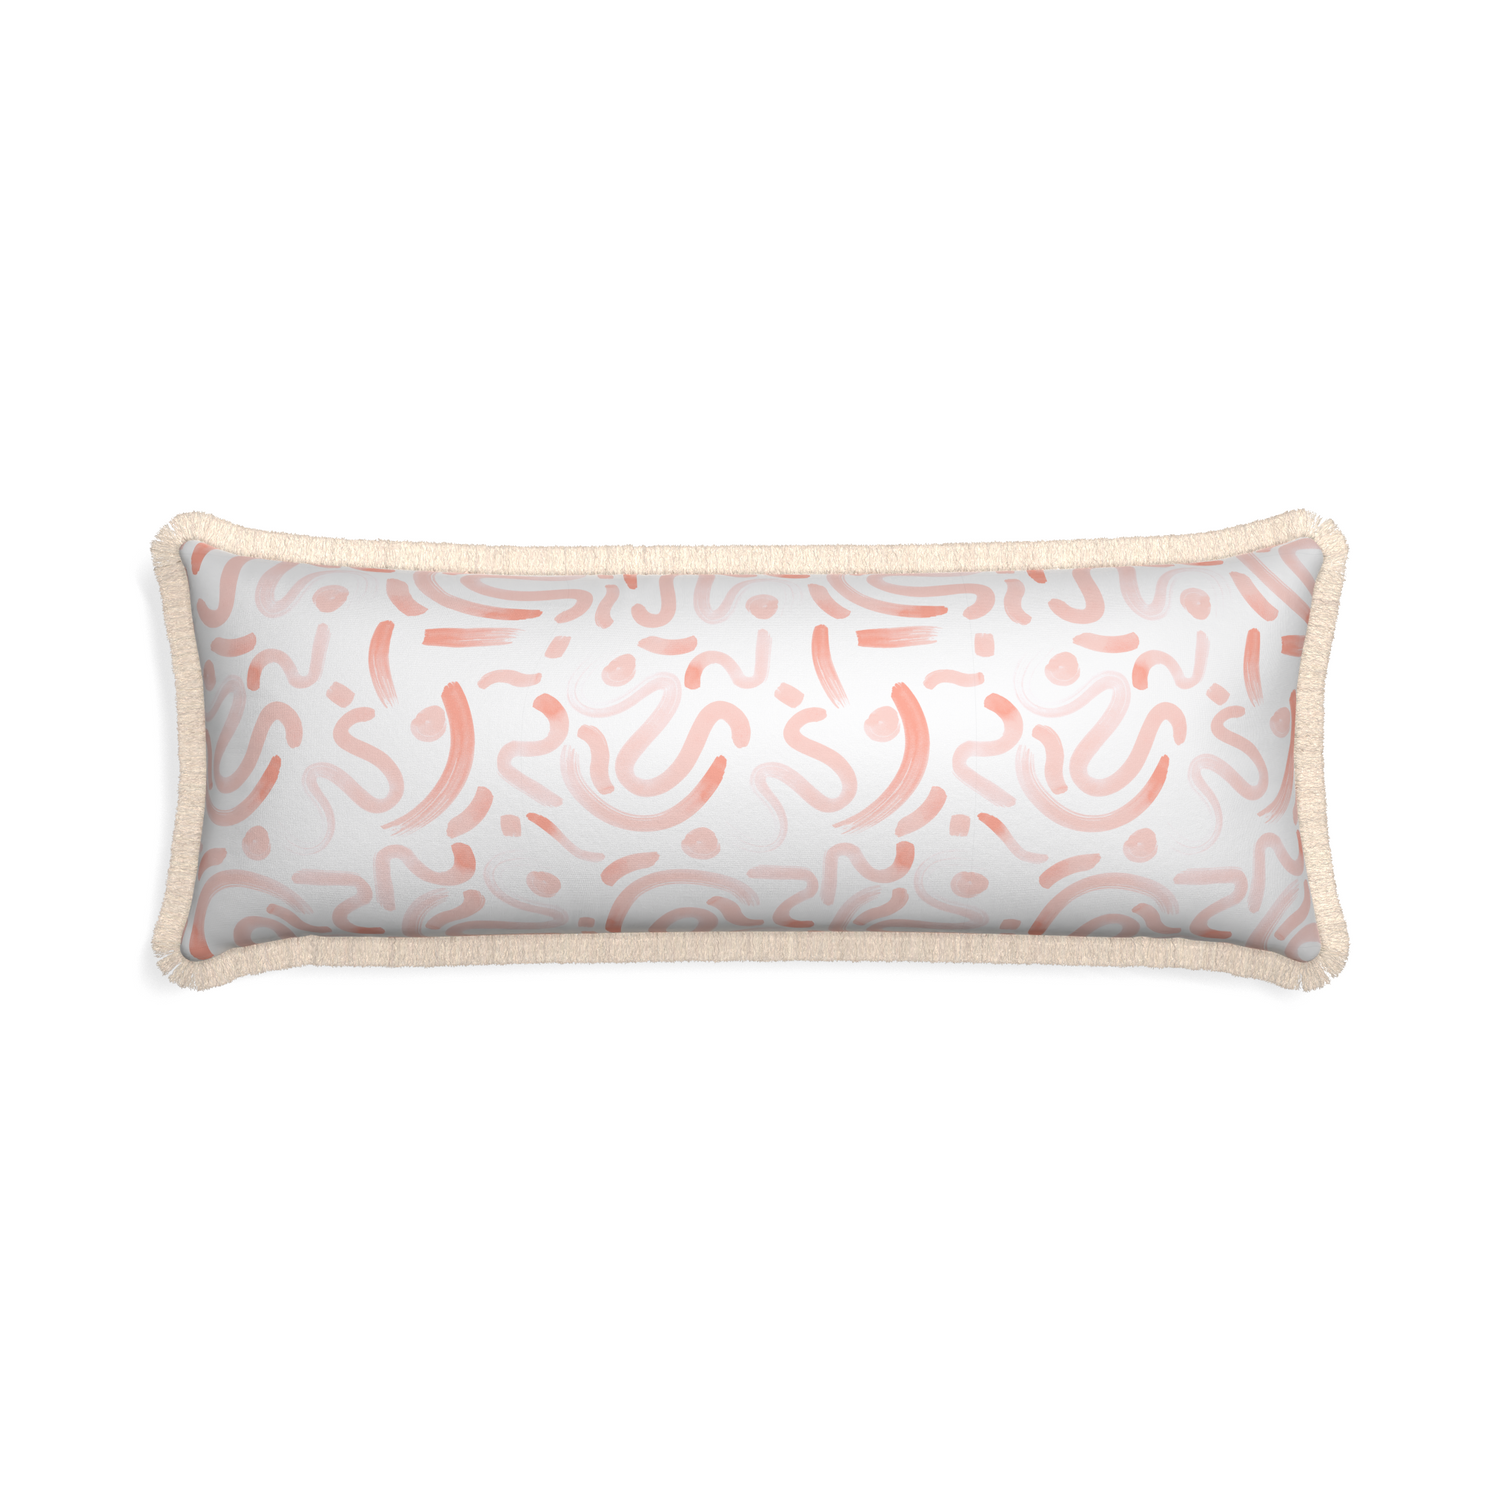 Xl-lumbar hockney pink custom pillow with cream fringe on white background